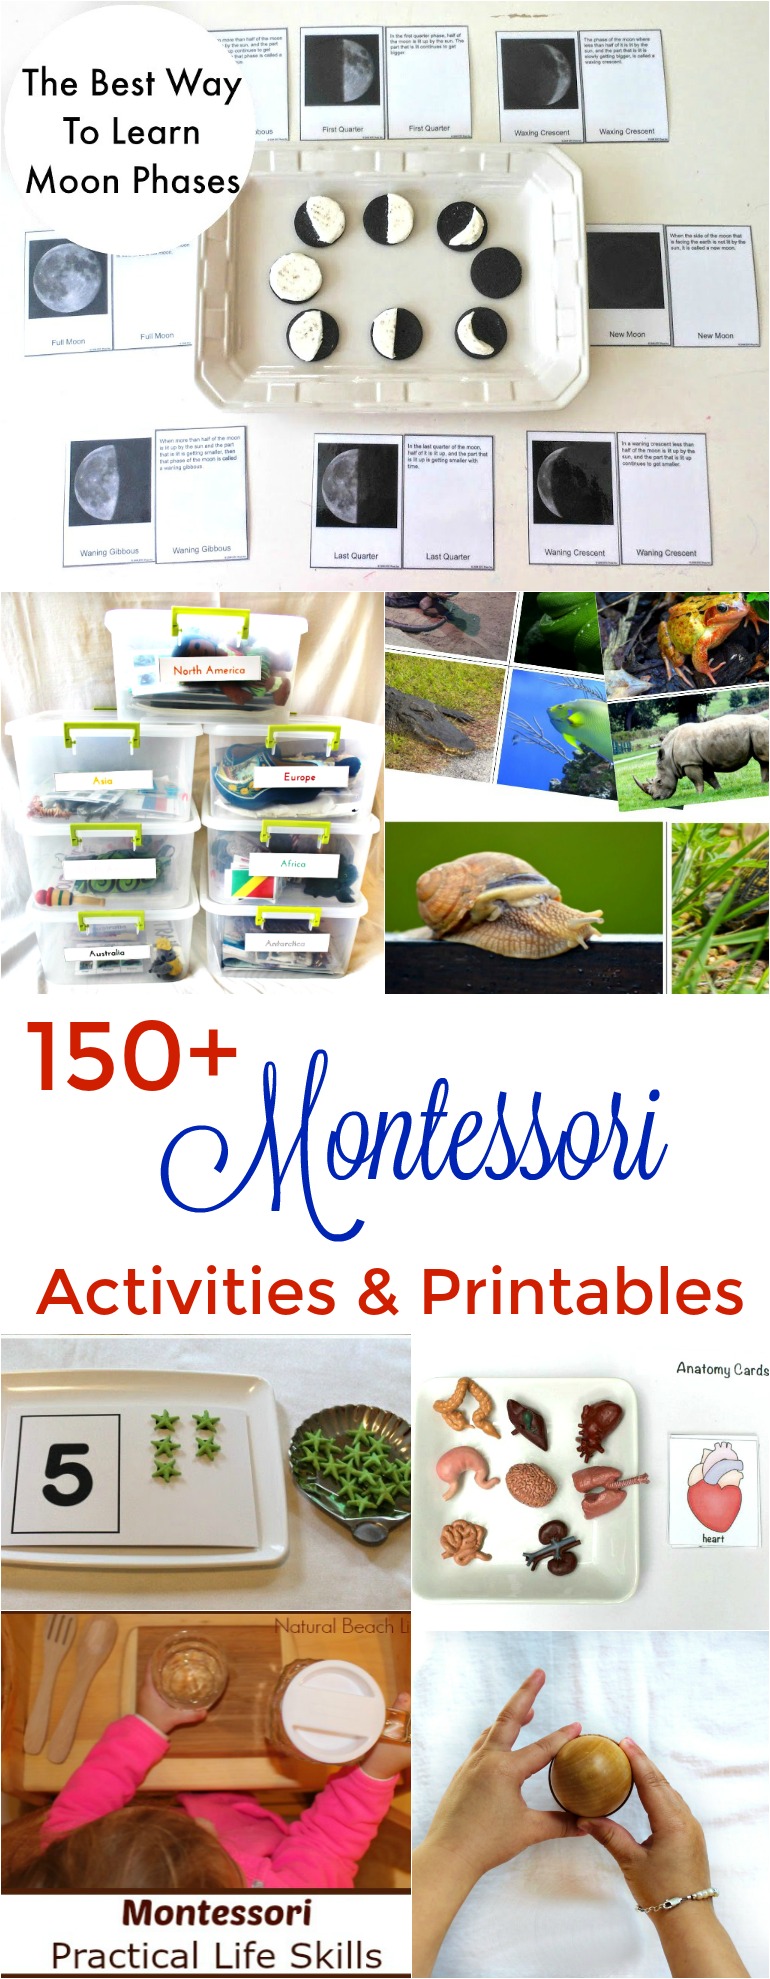 Montessori Sensorial Materials Every Child Will Love, Perfect Montessori Activities and Montessori Materials for Preschool, Sensory, Smelling bottles, Color